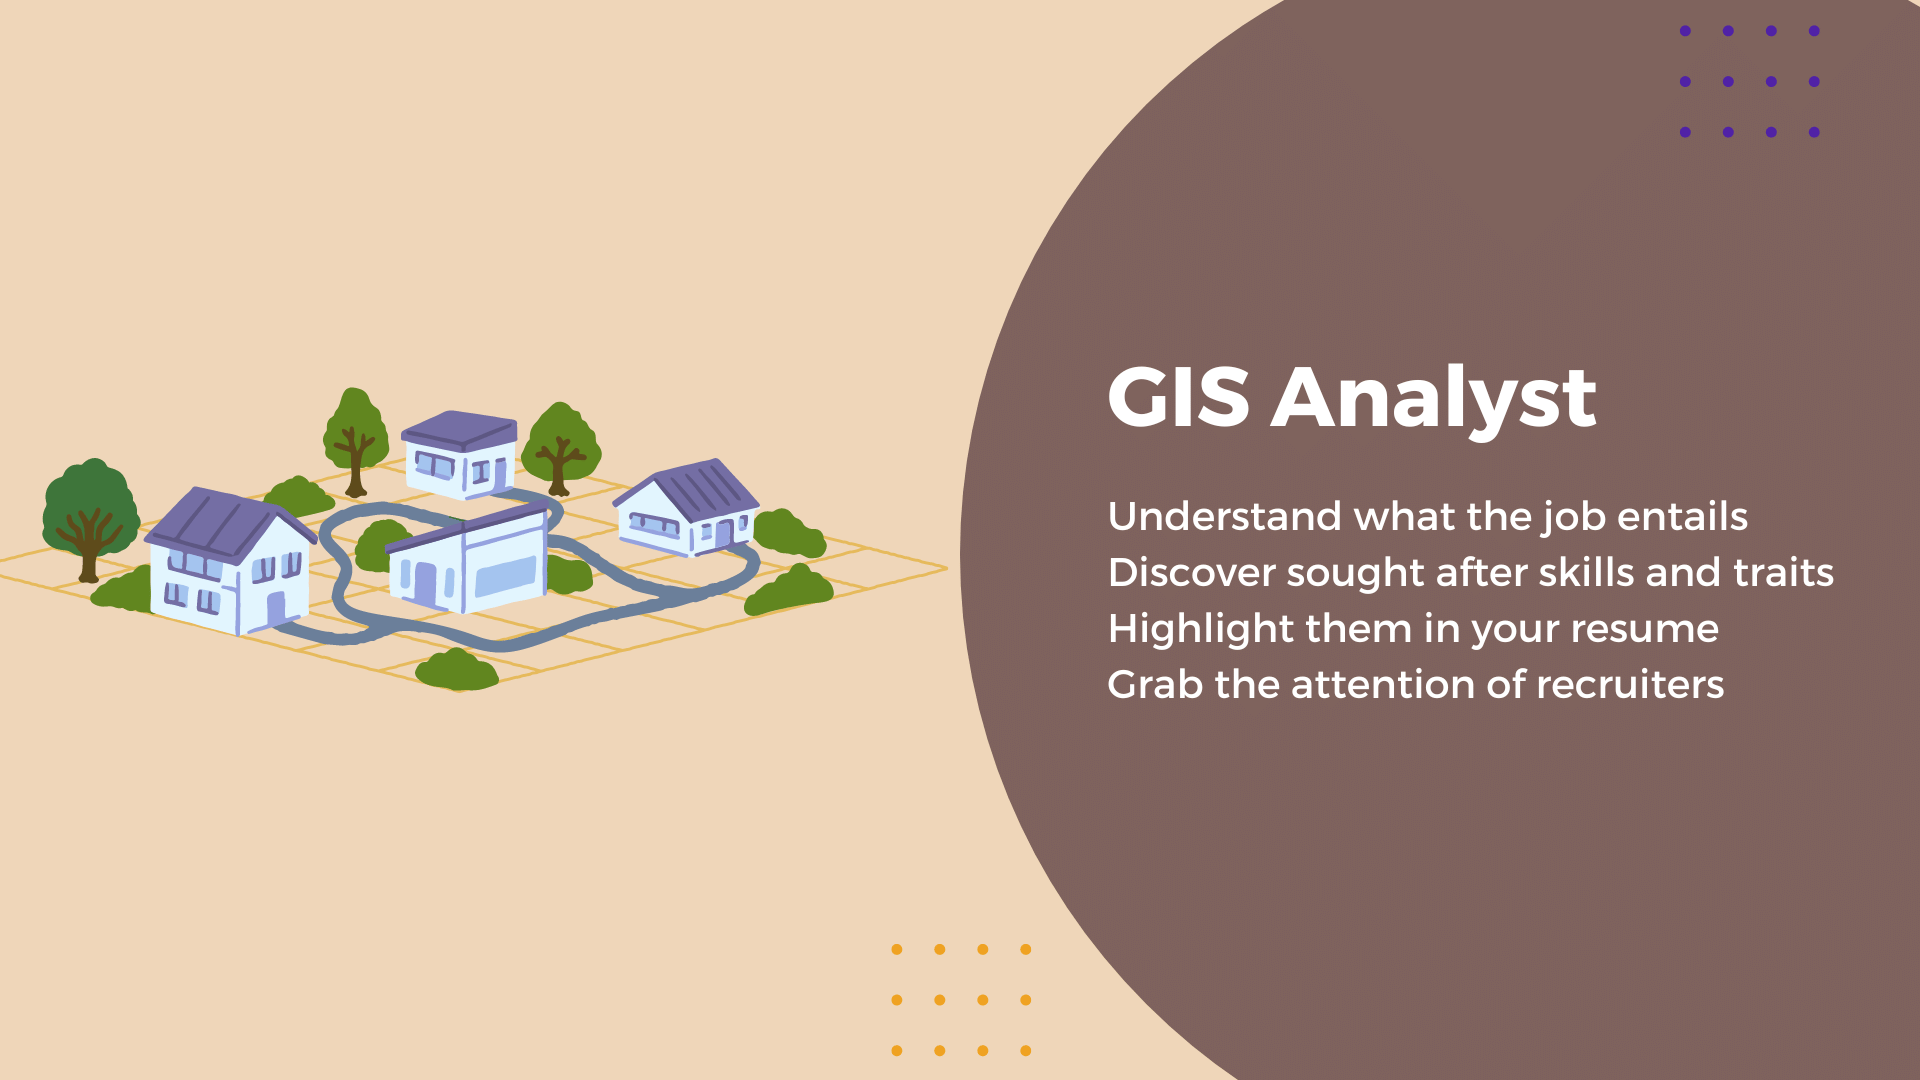 GIS Analyst job skills